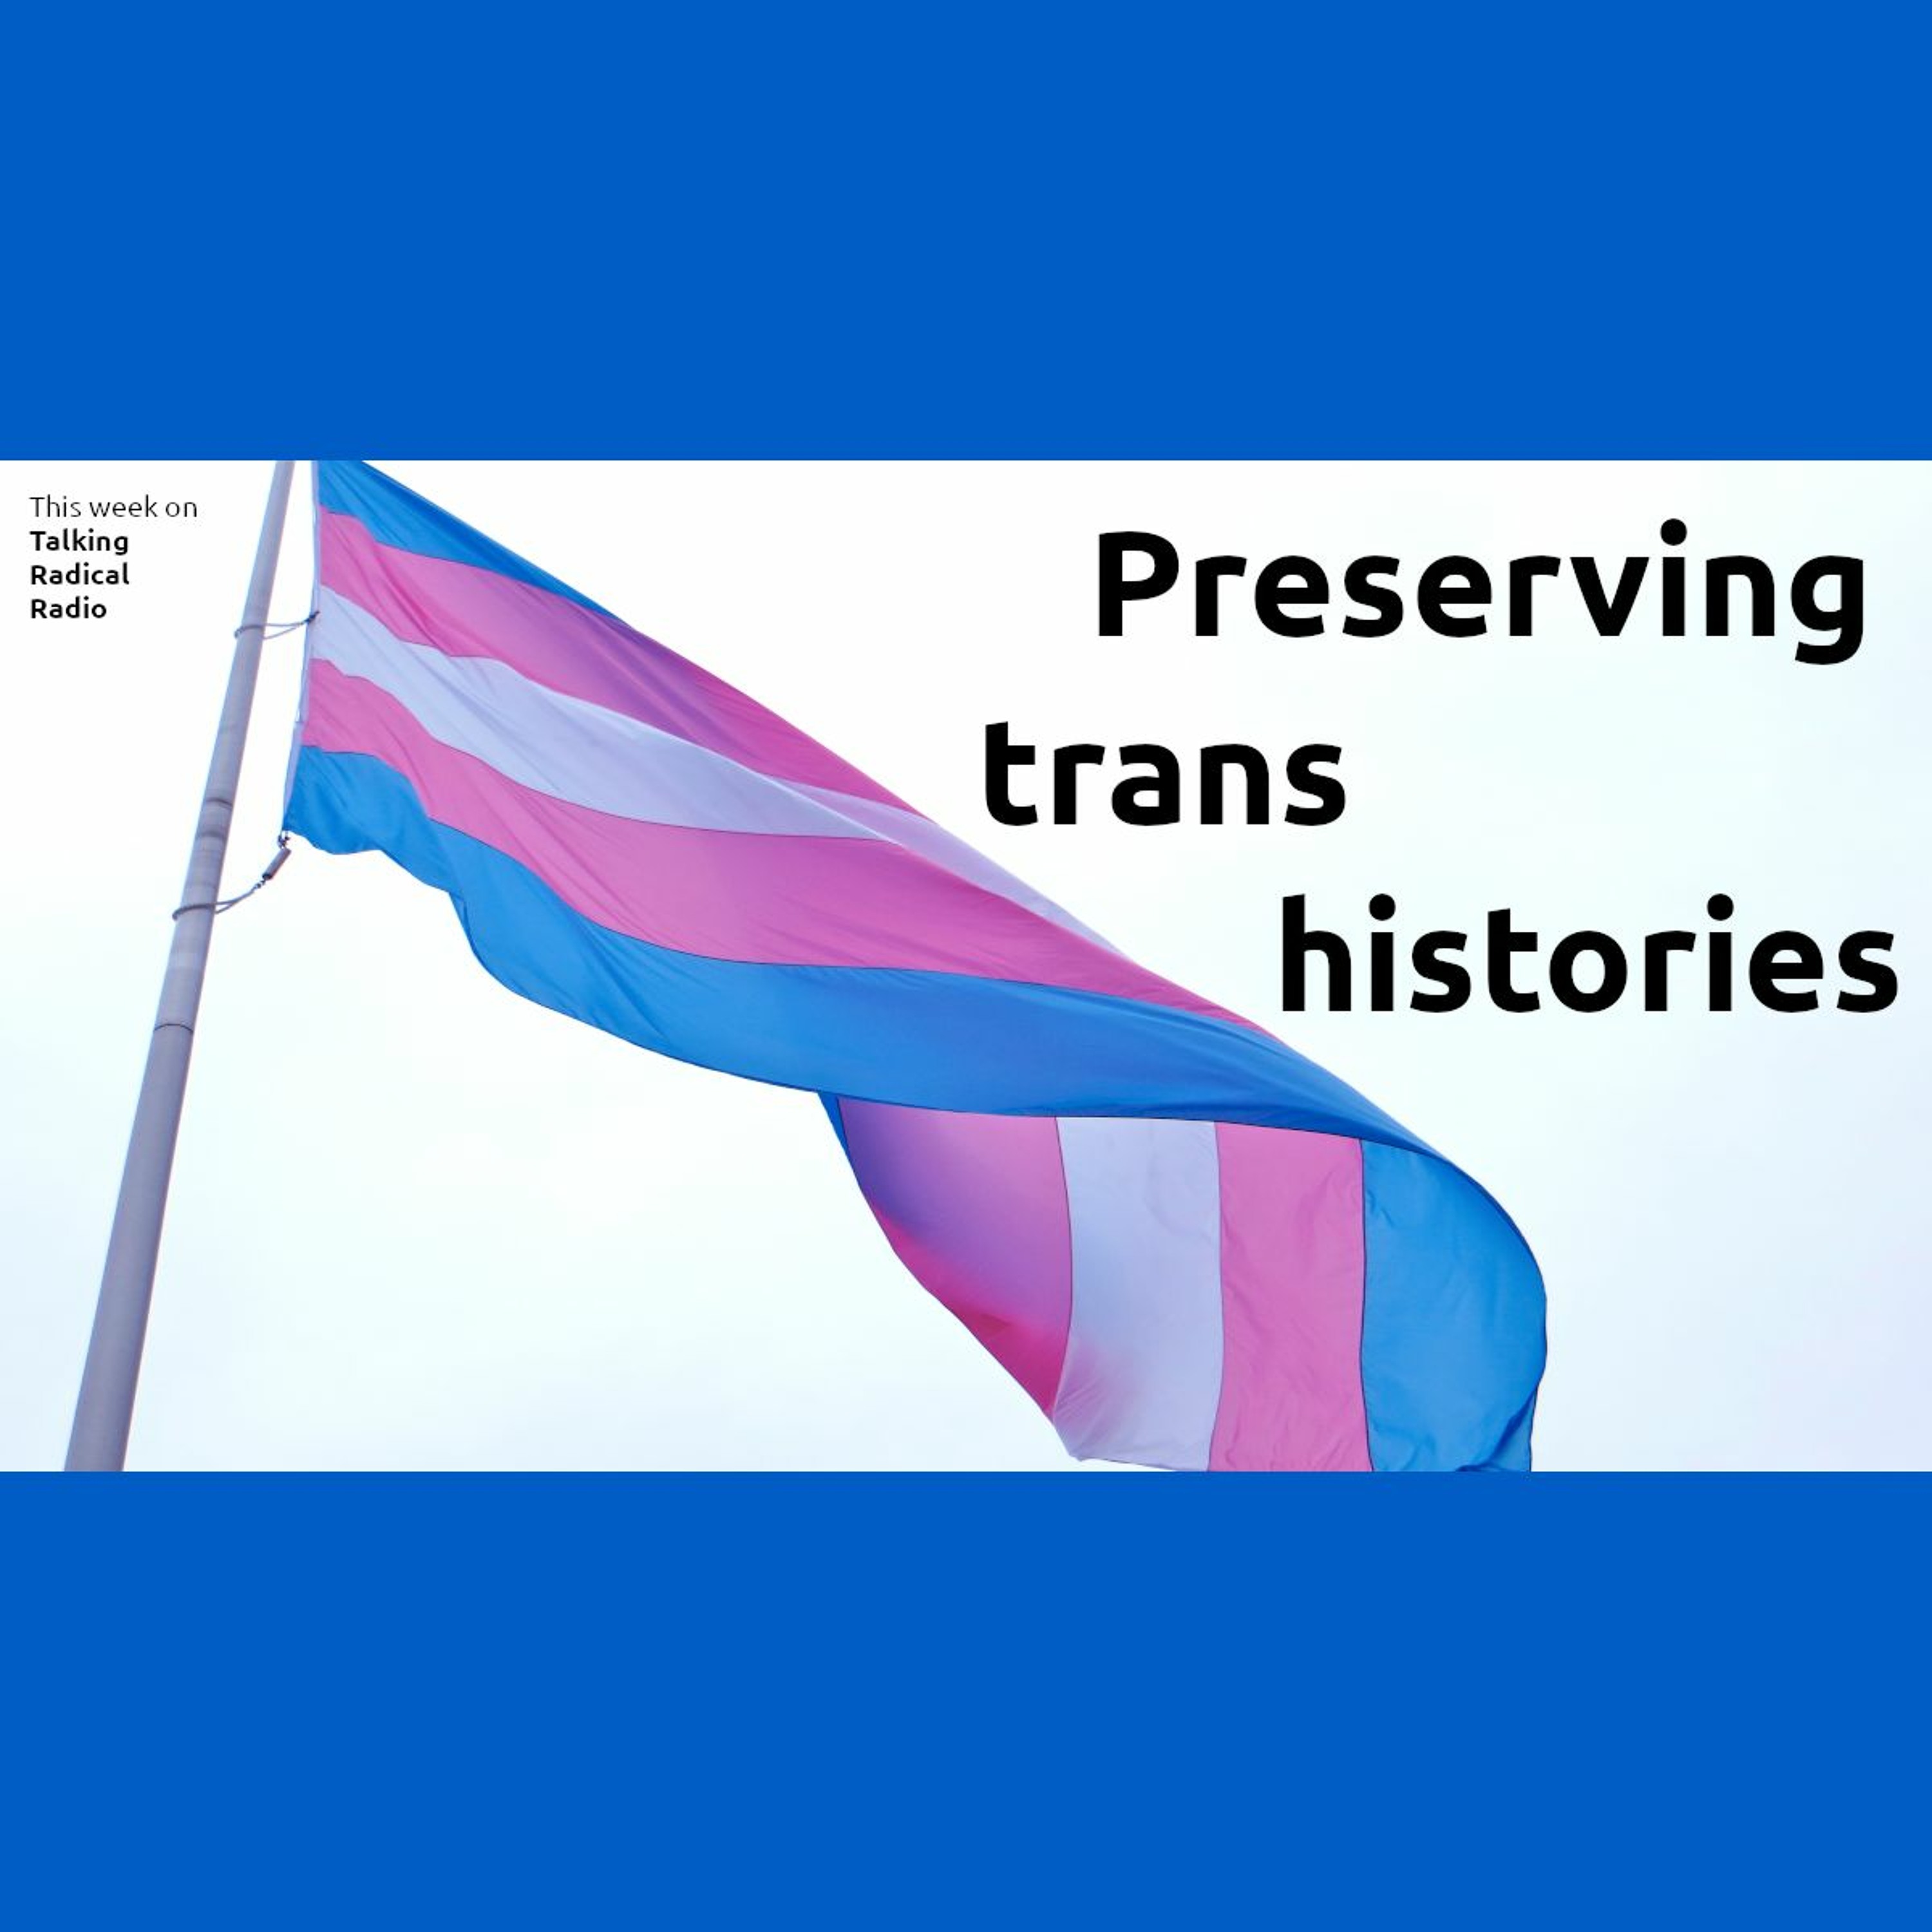 Preserving trans histories